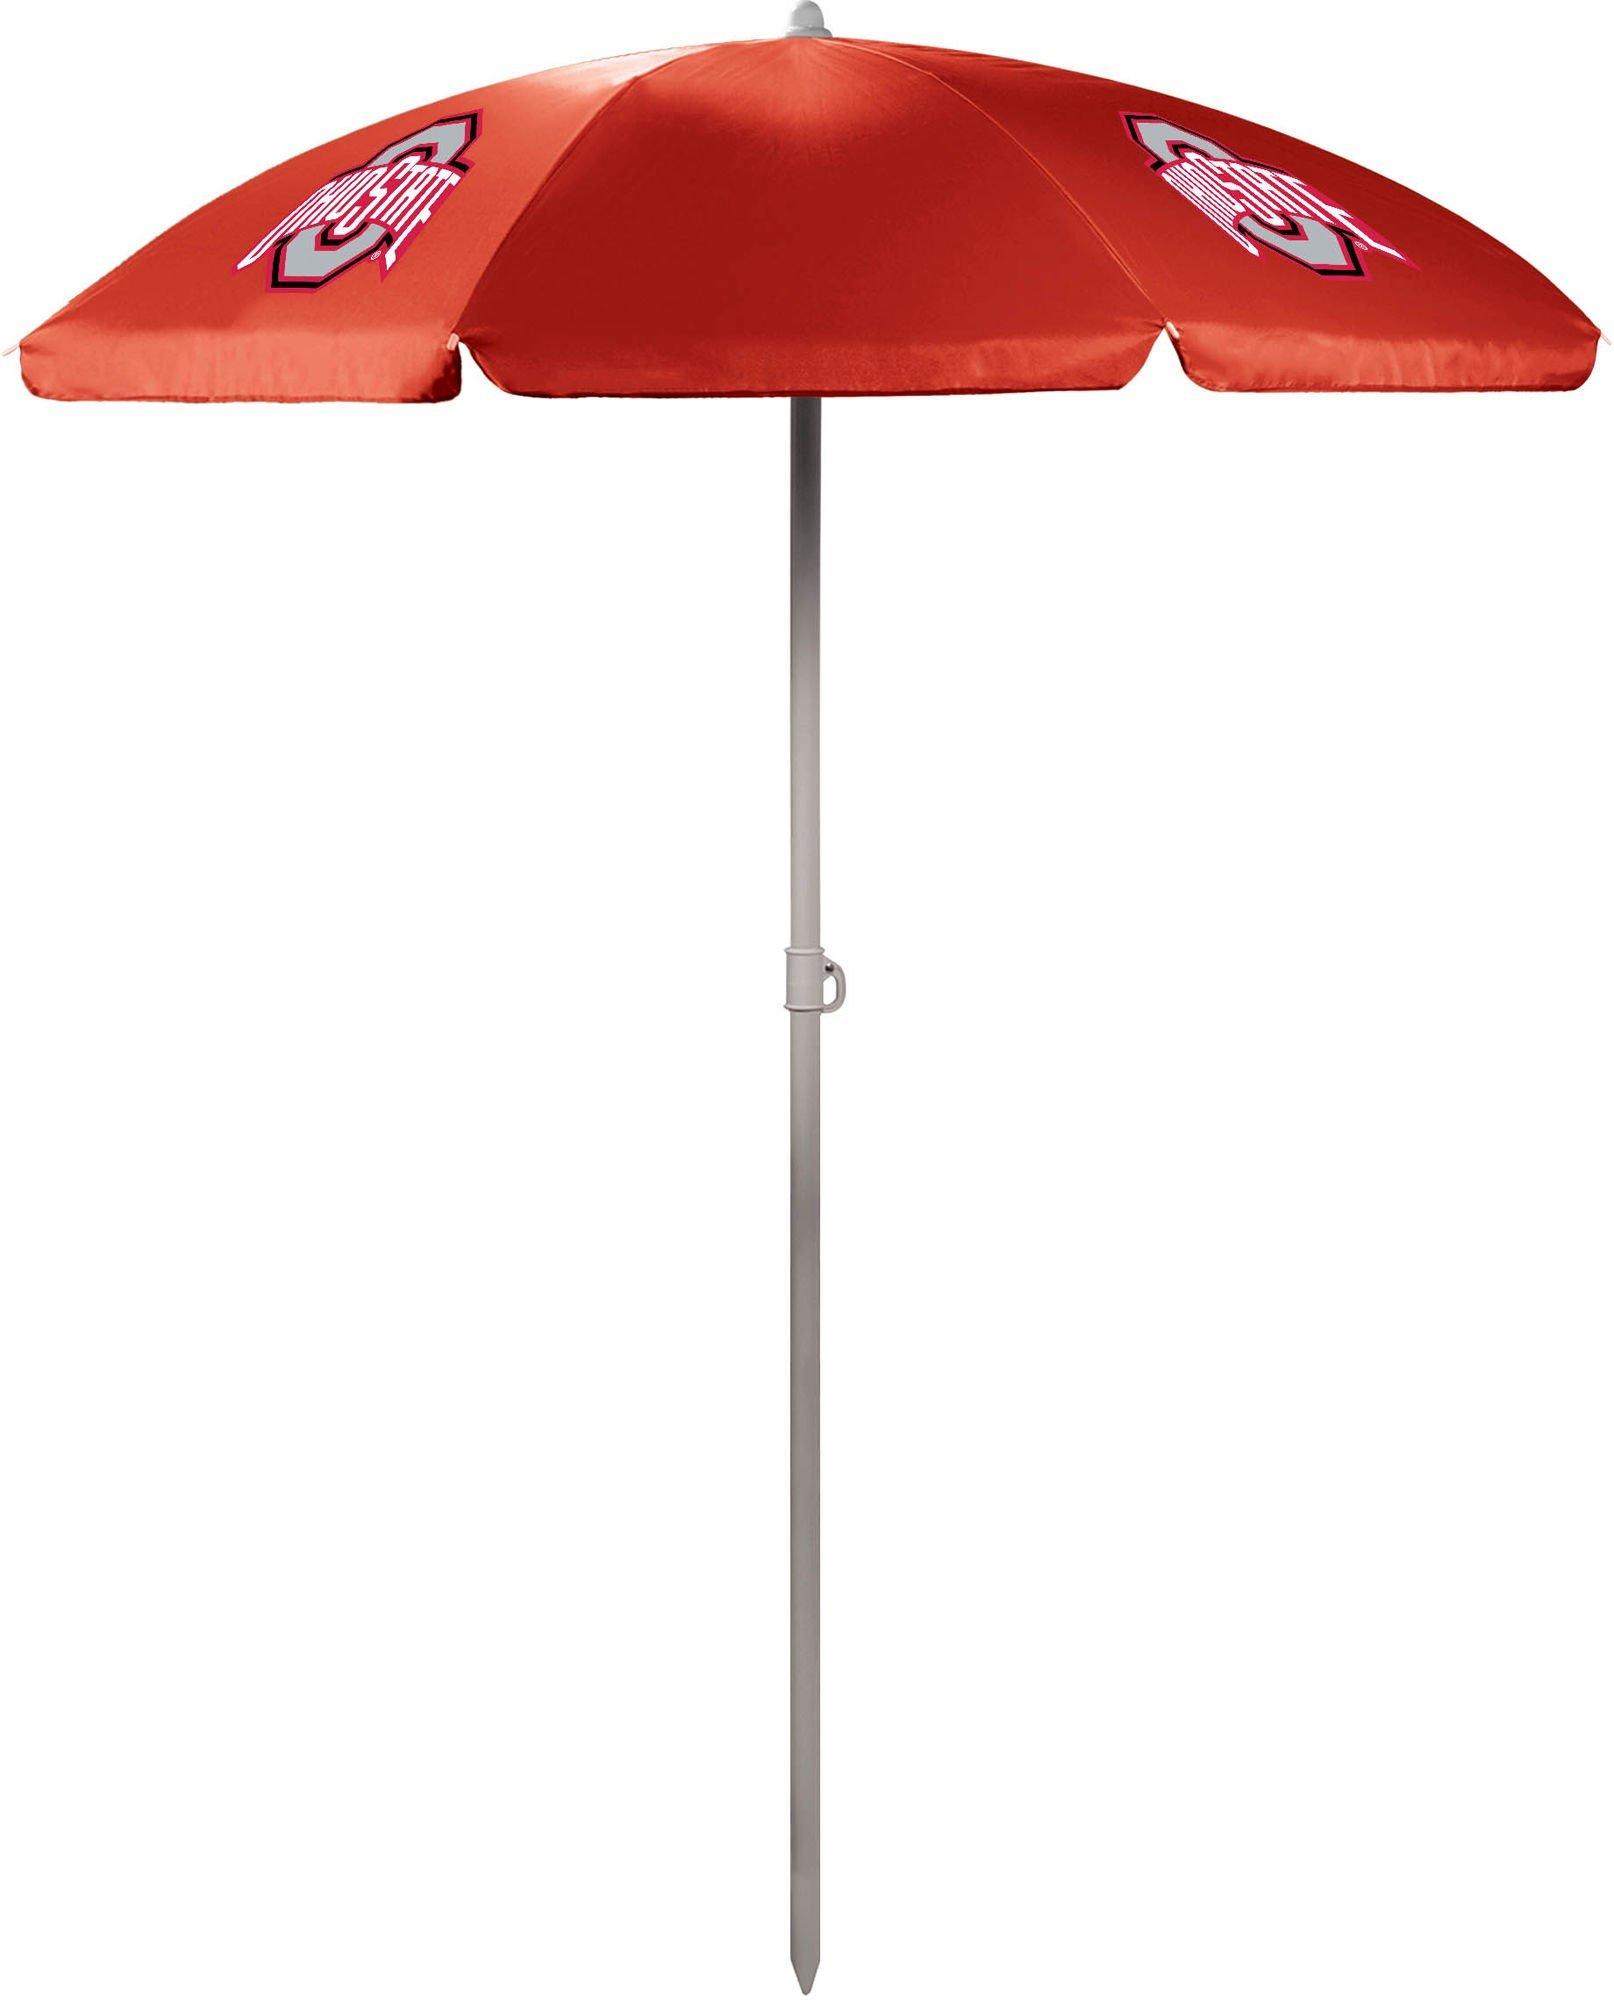 Ohio State Portable Umbrella